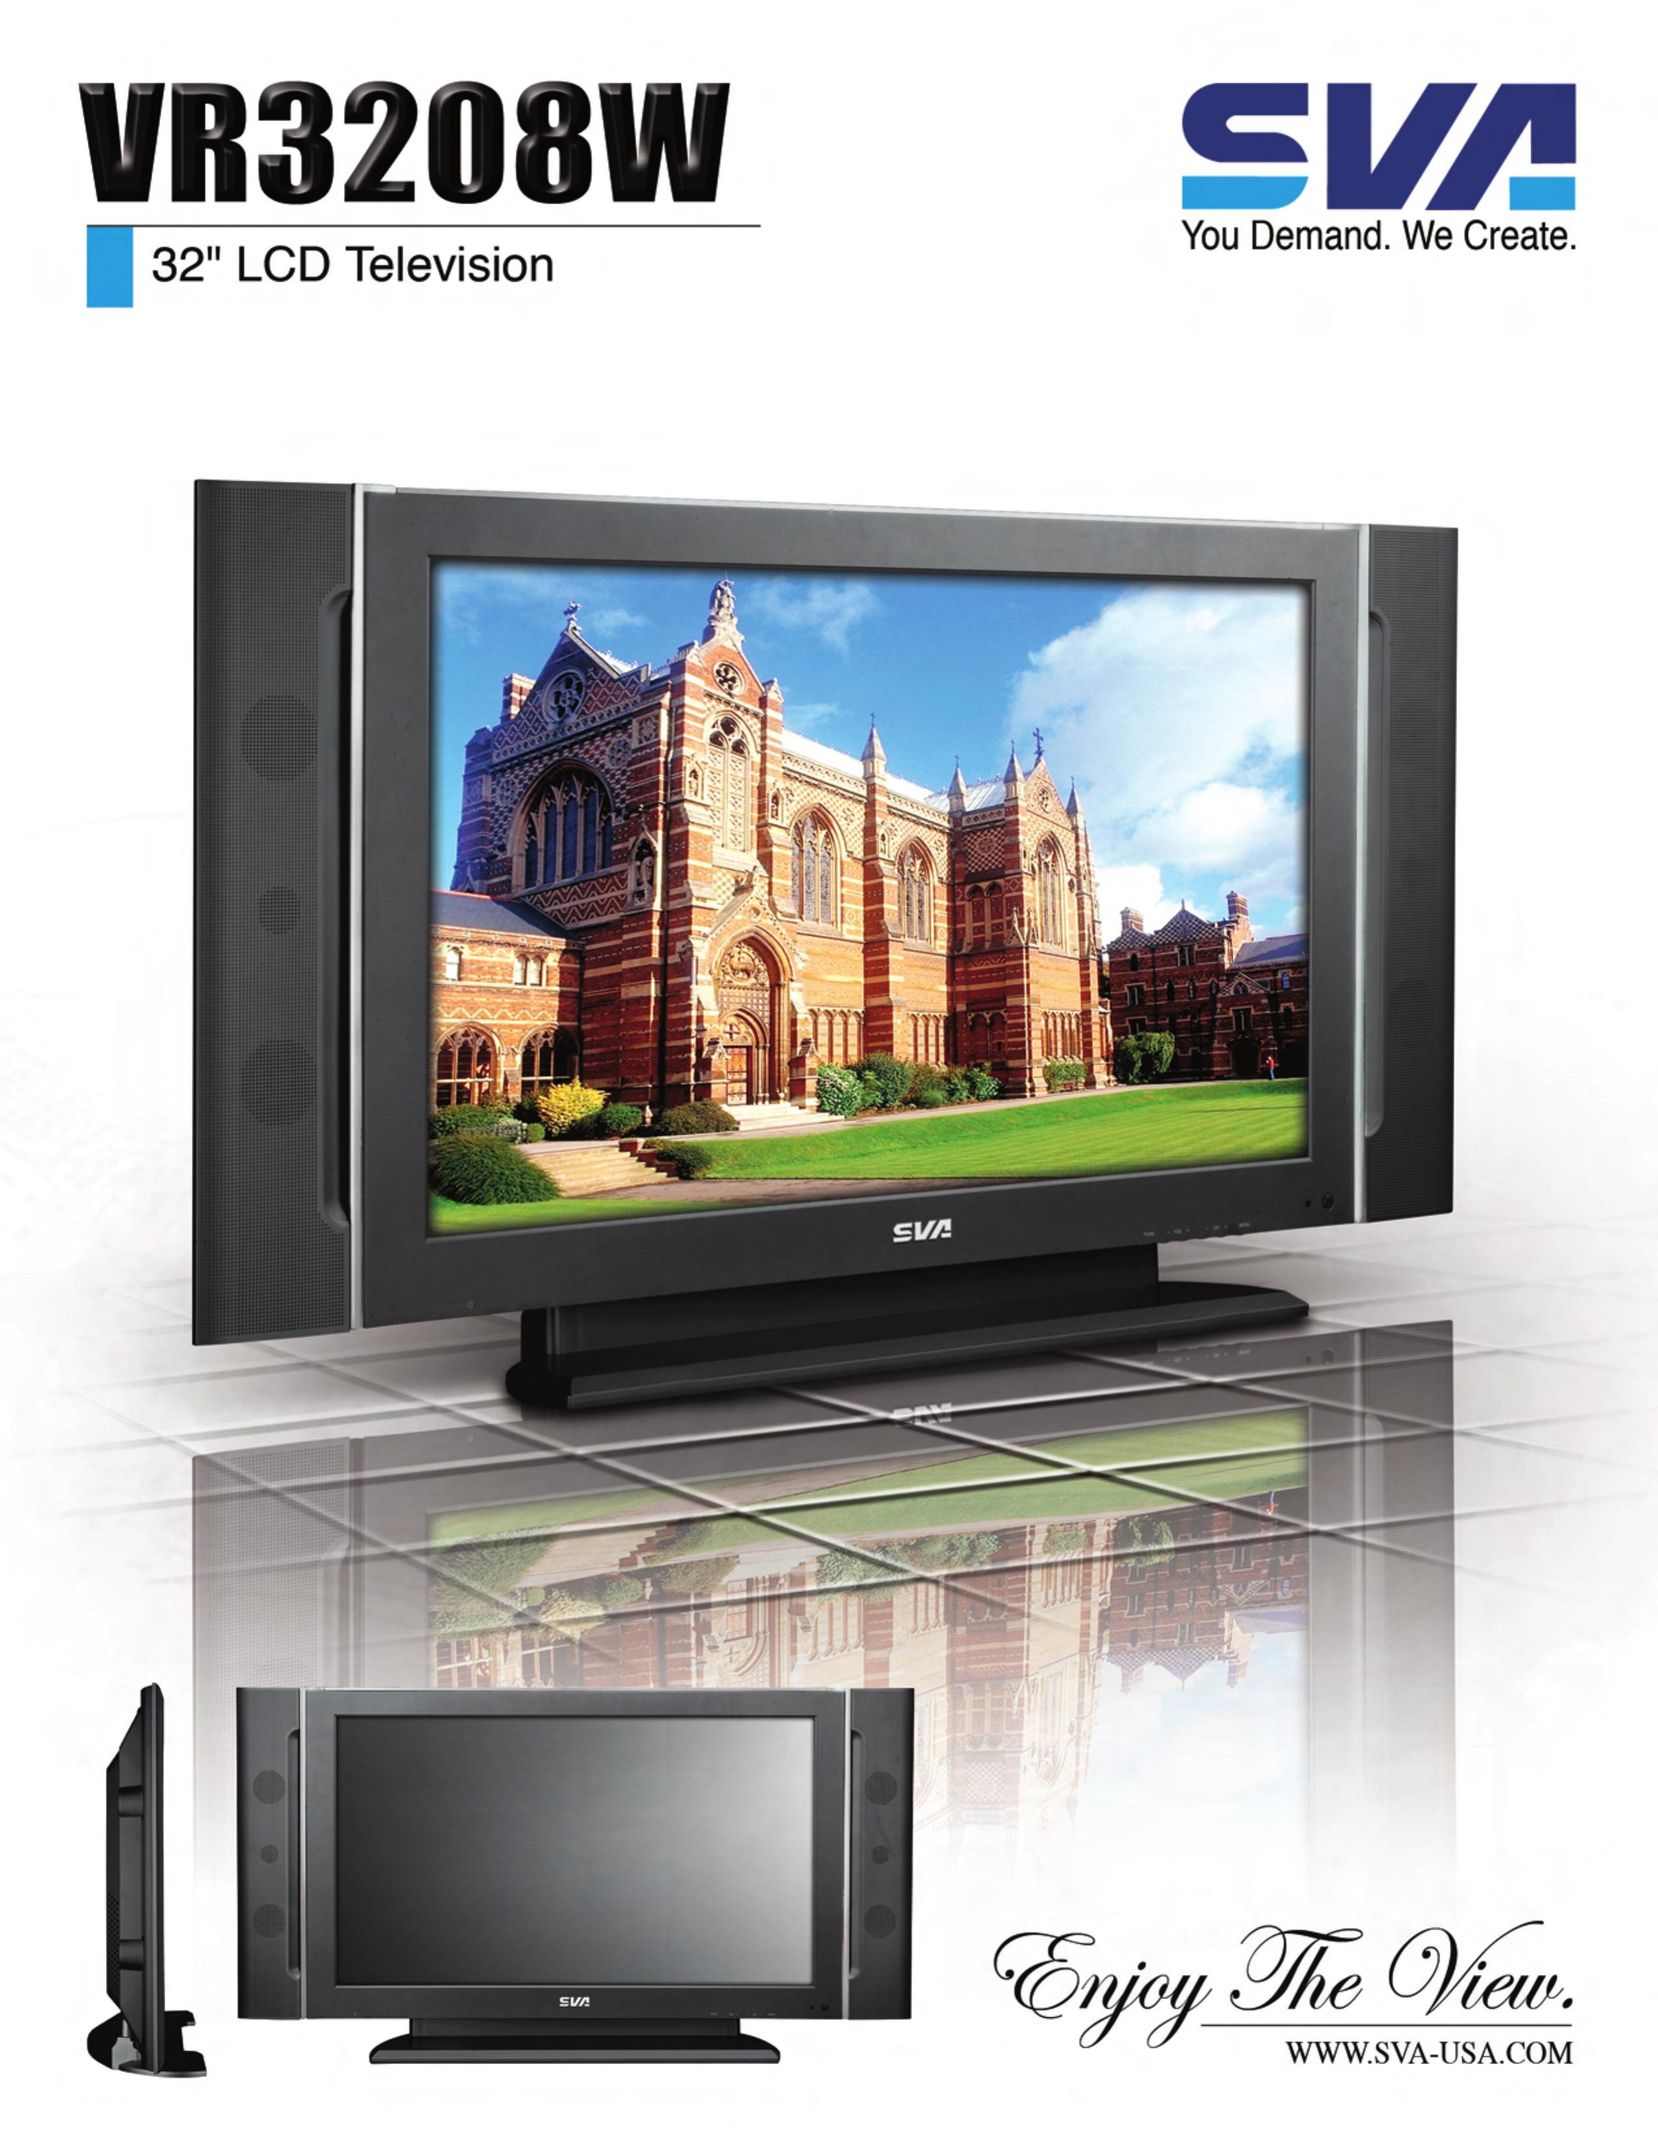 SVA VR3208W Flat Panel Television User Manual